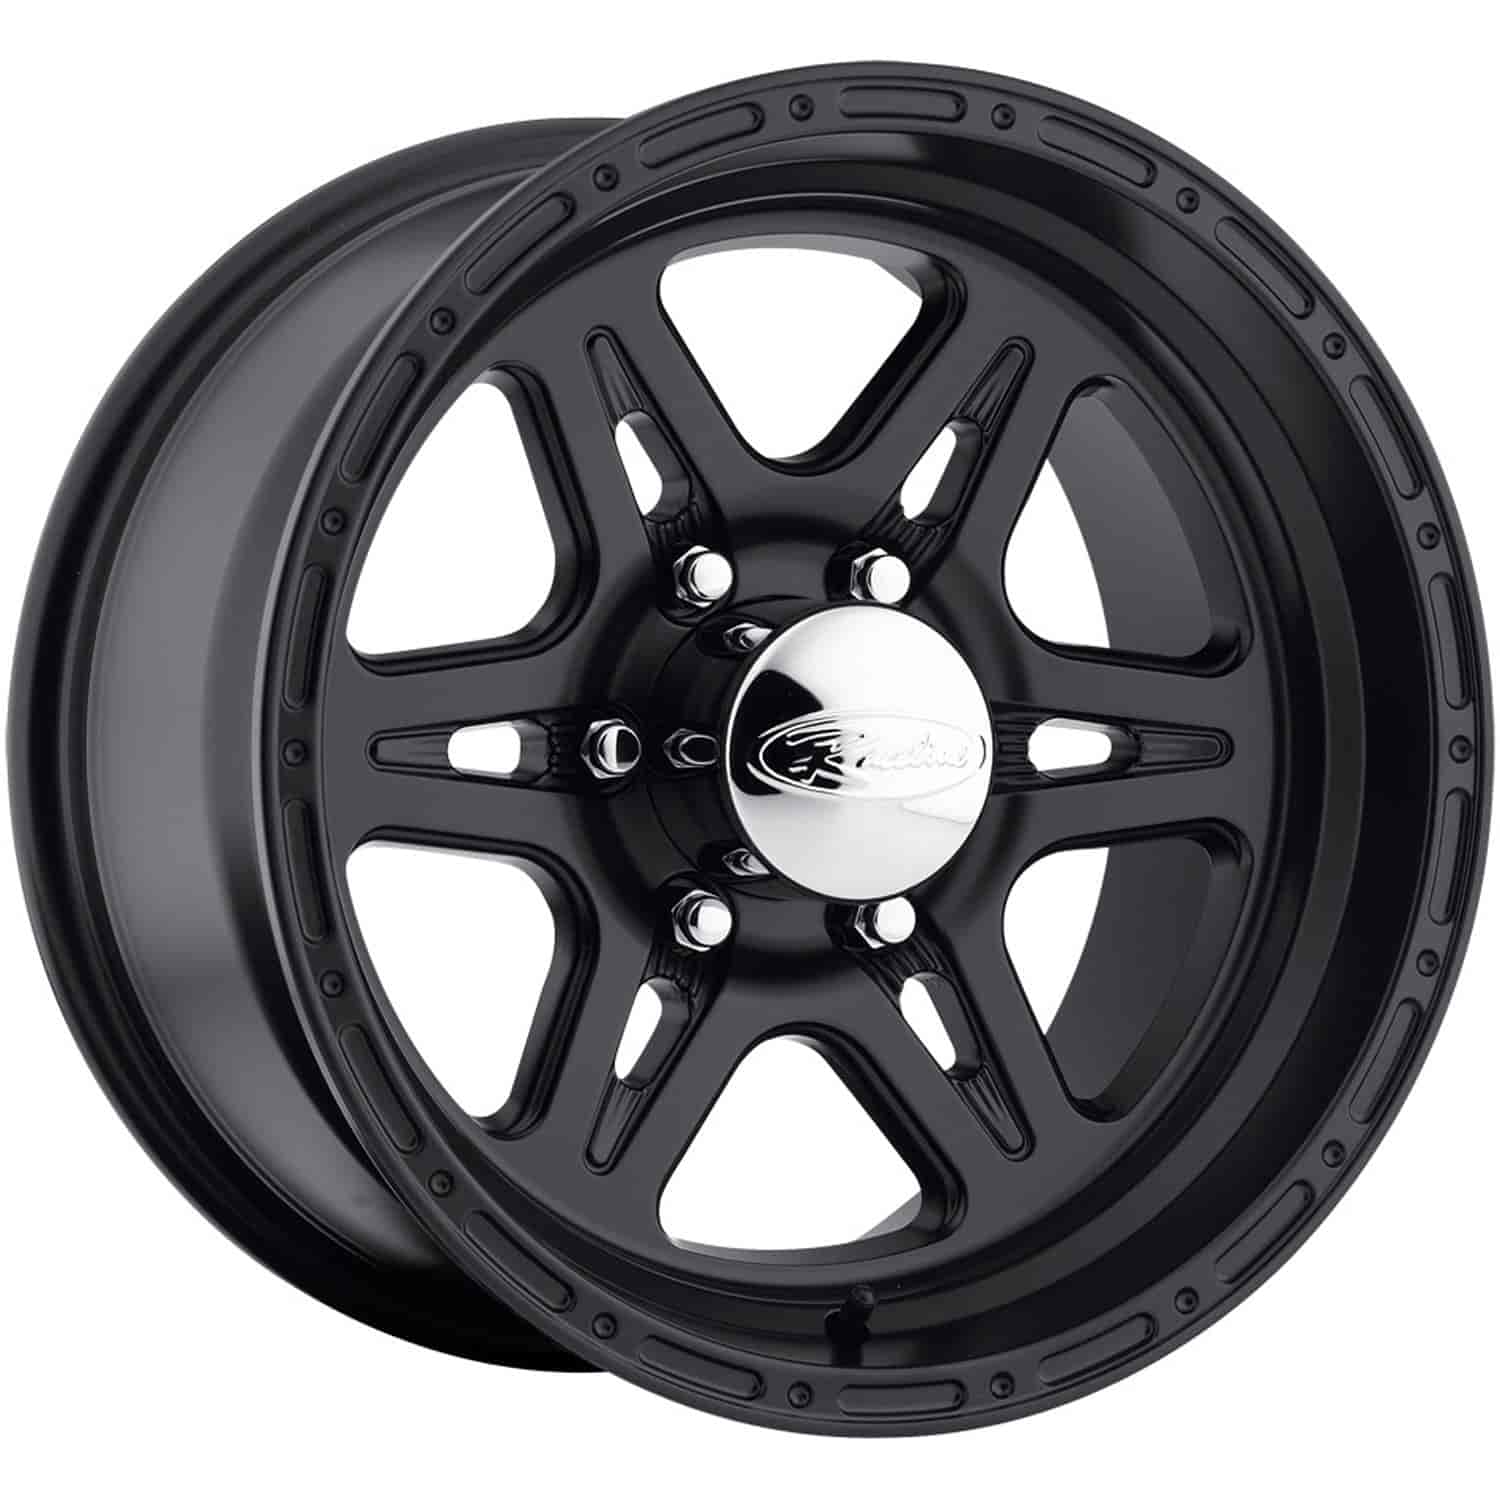 891 Renegade Wheel Size: 16 X 8" Bolt Pattern: 6X139.7 mm [Satin Black]